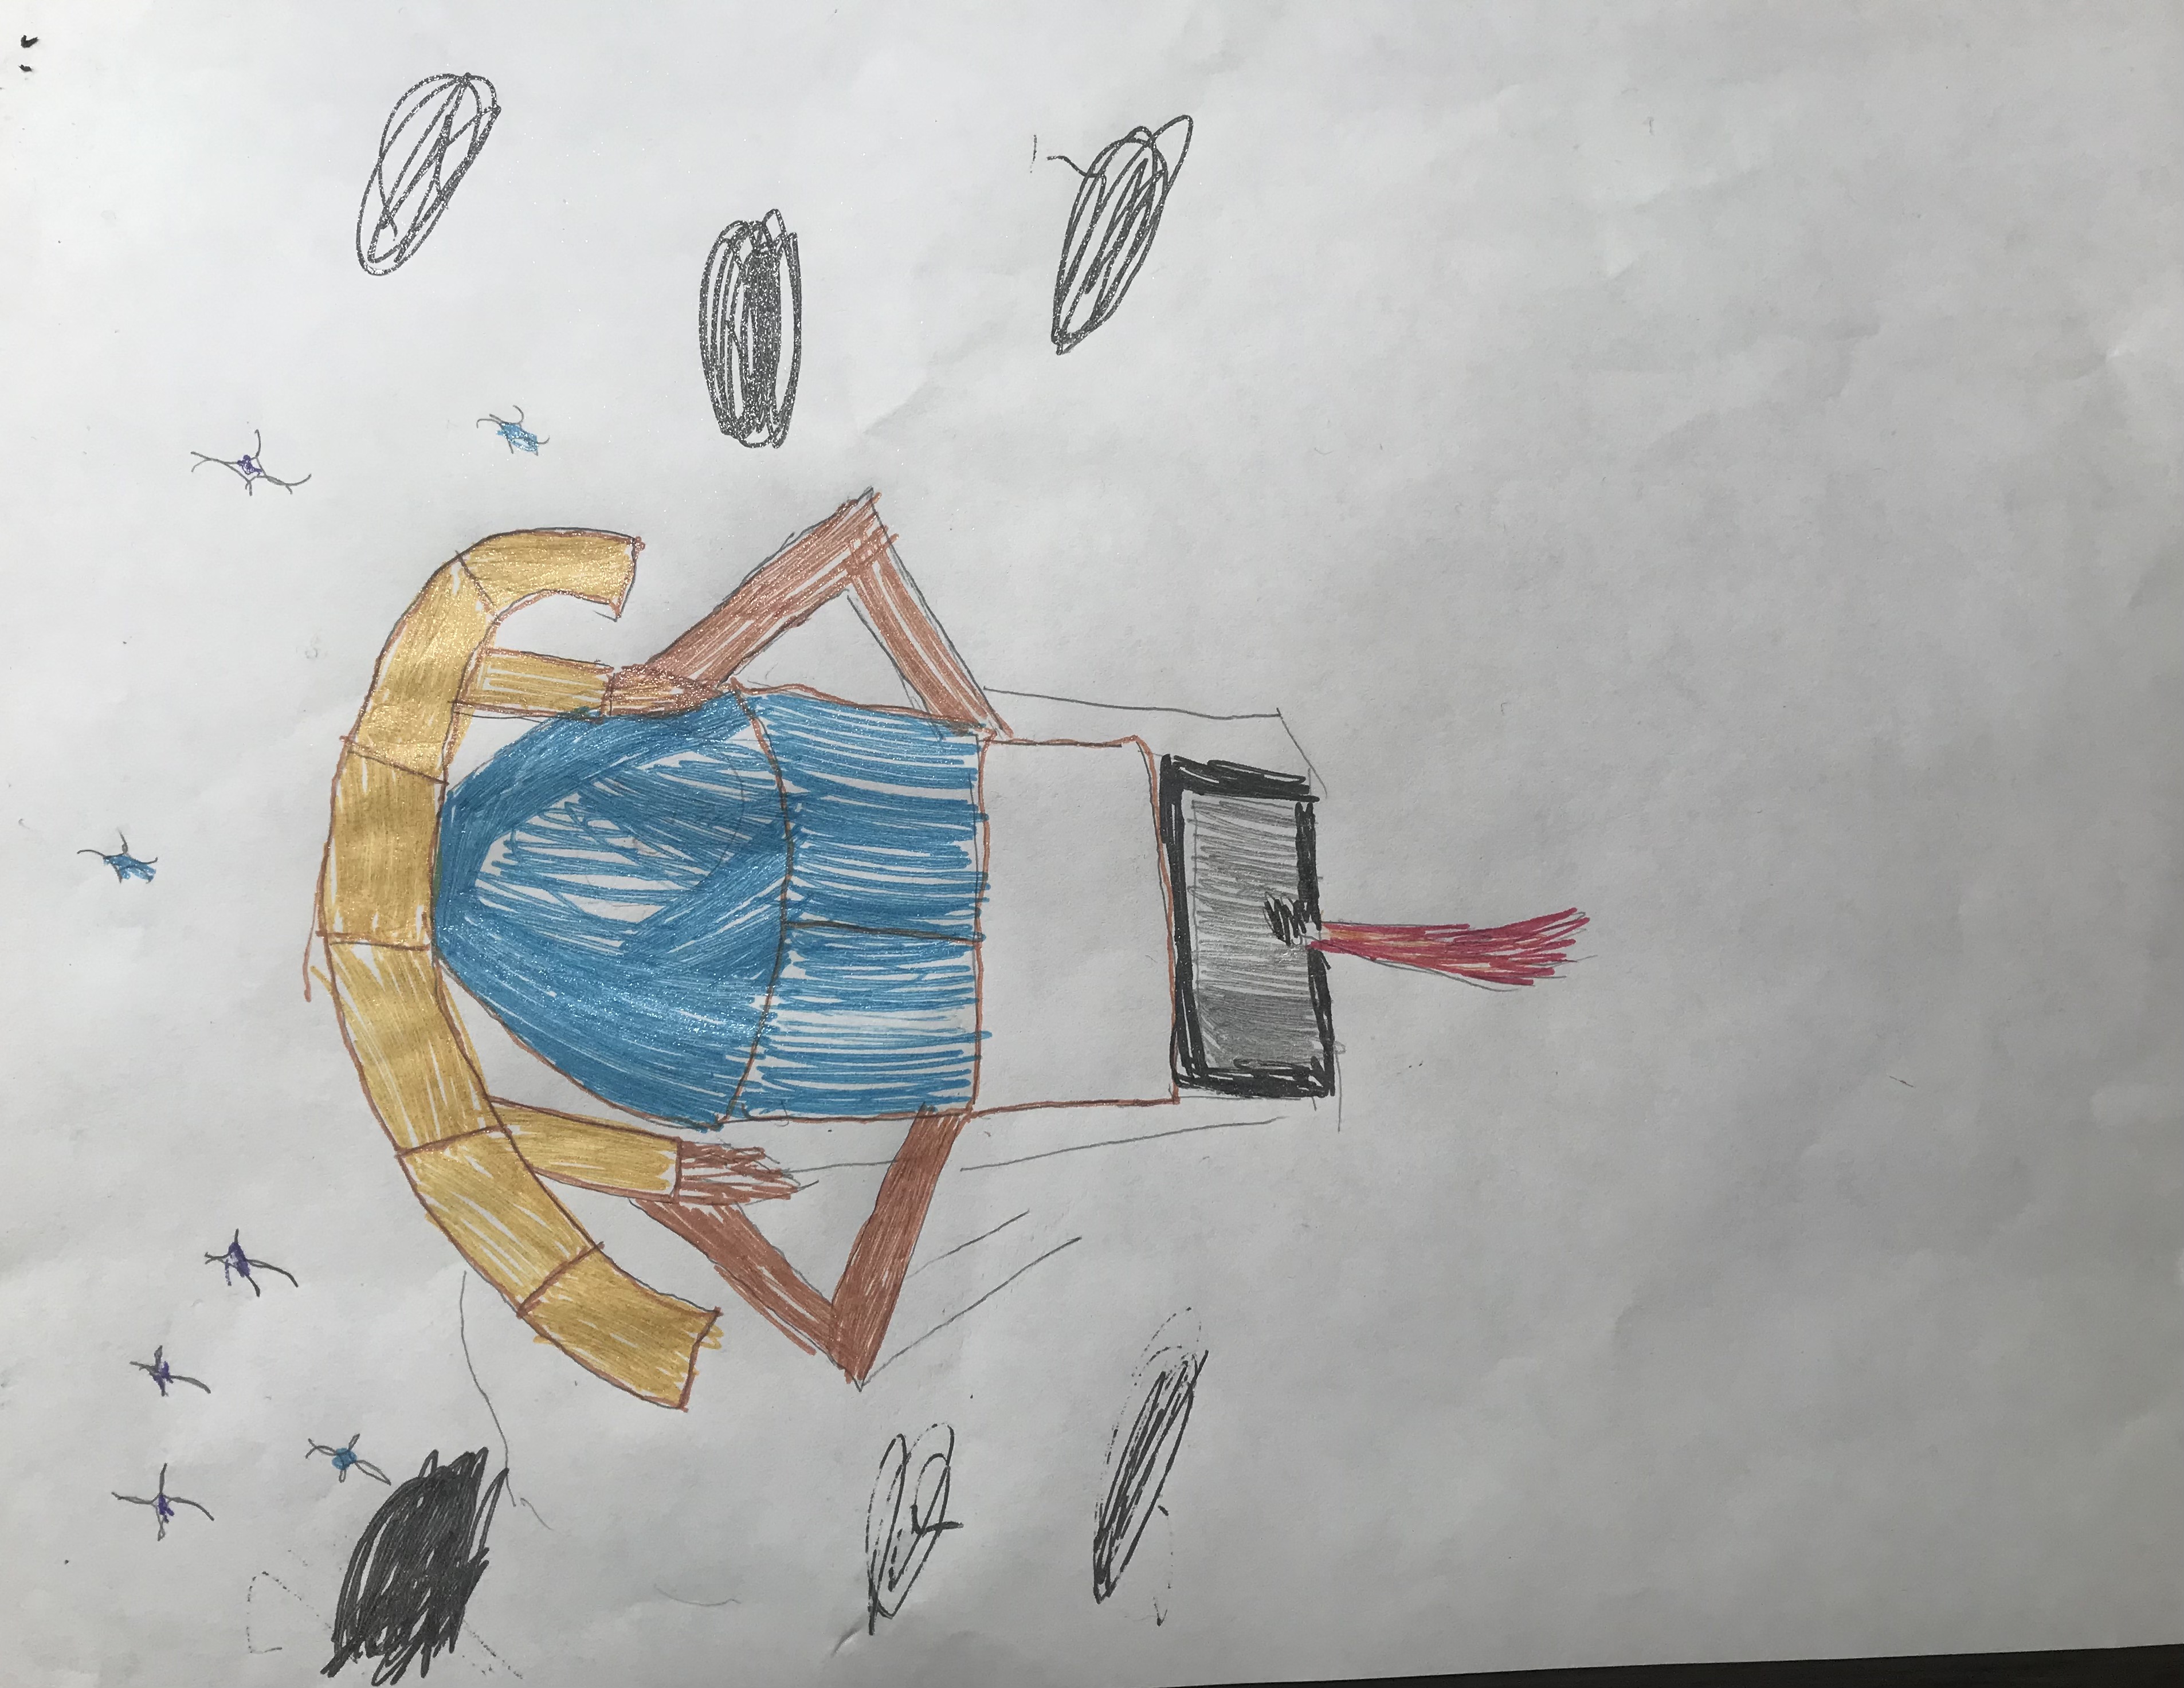 Kokoska's illustration of her favorite choose your own adventure ending of a rocket